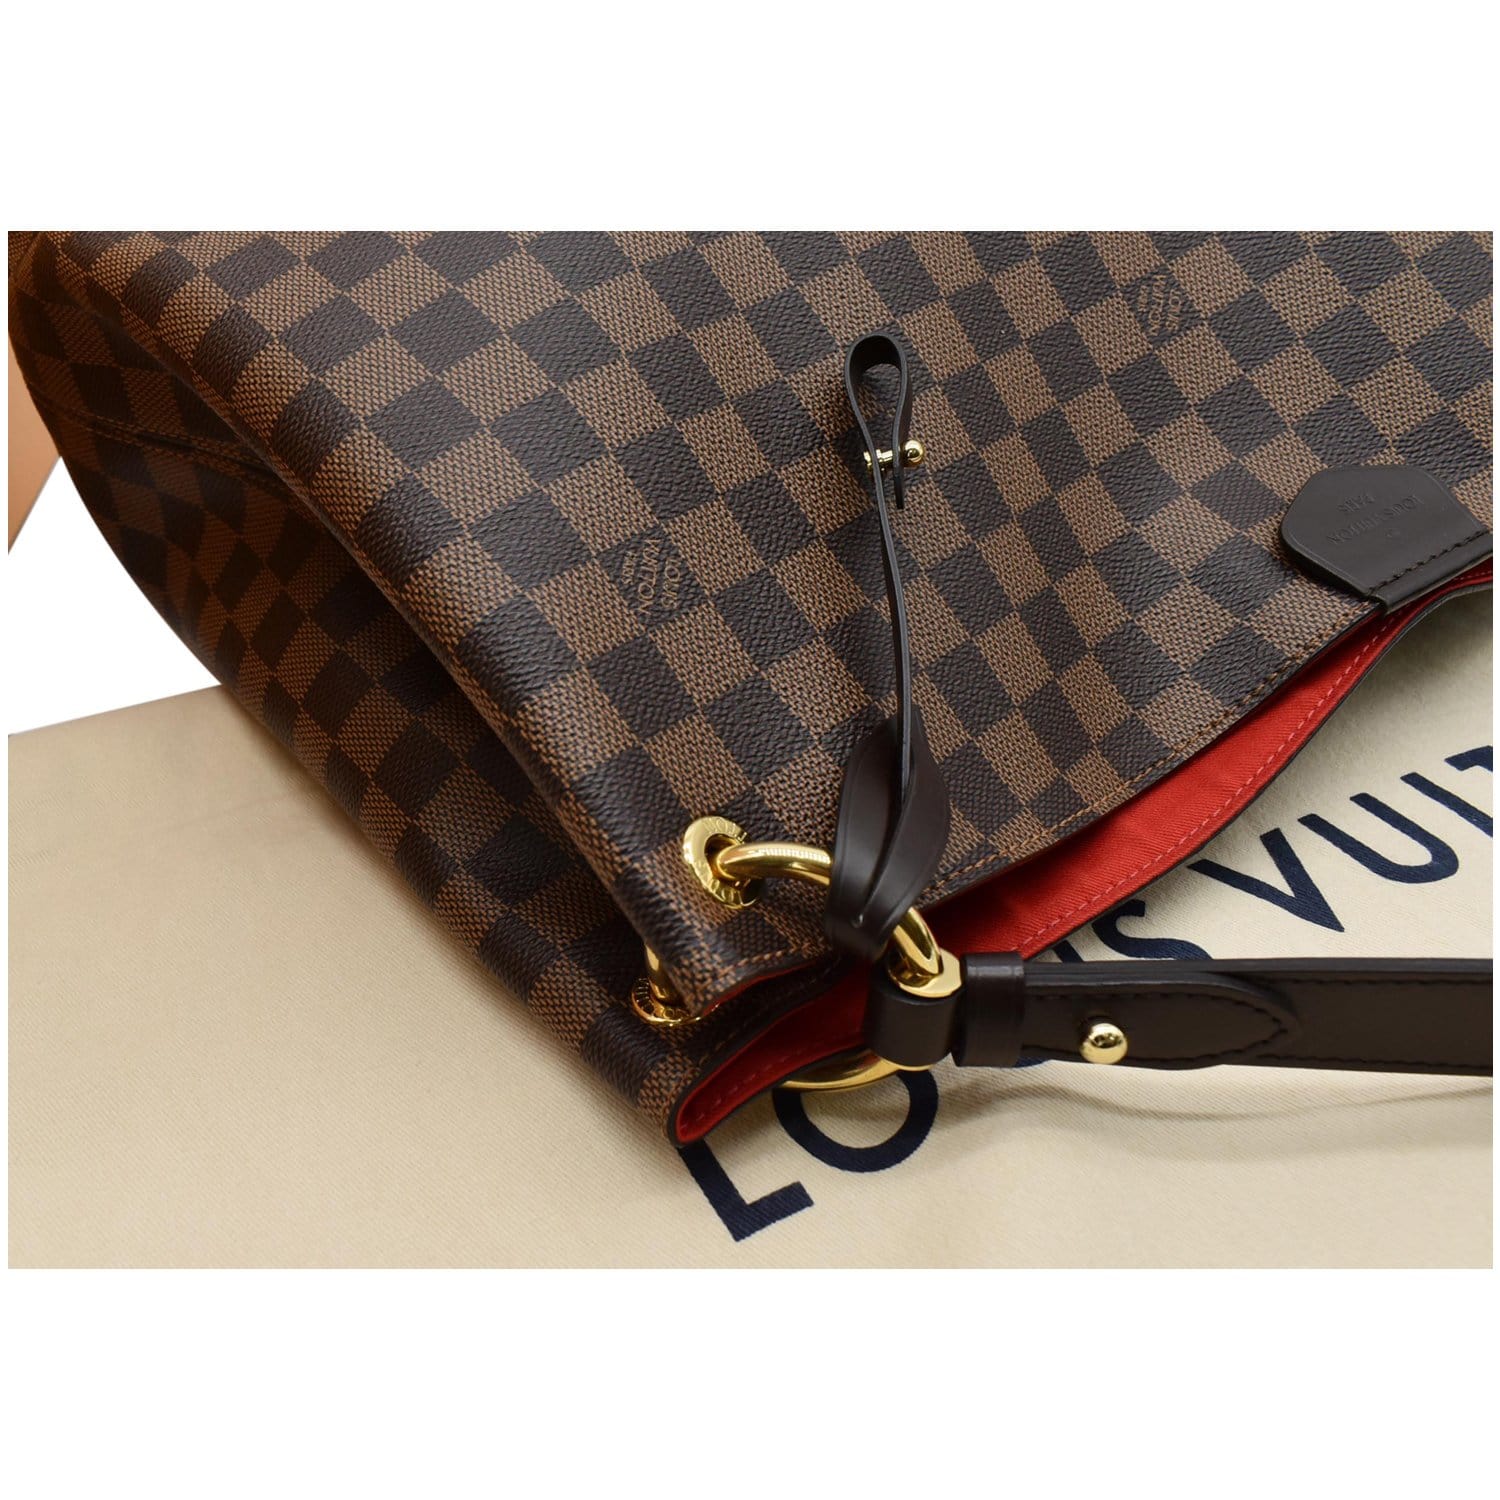 Louis Vuitton Graceful Hobo Damien Ebene Canvas Brown Plaid Handbag Purse